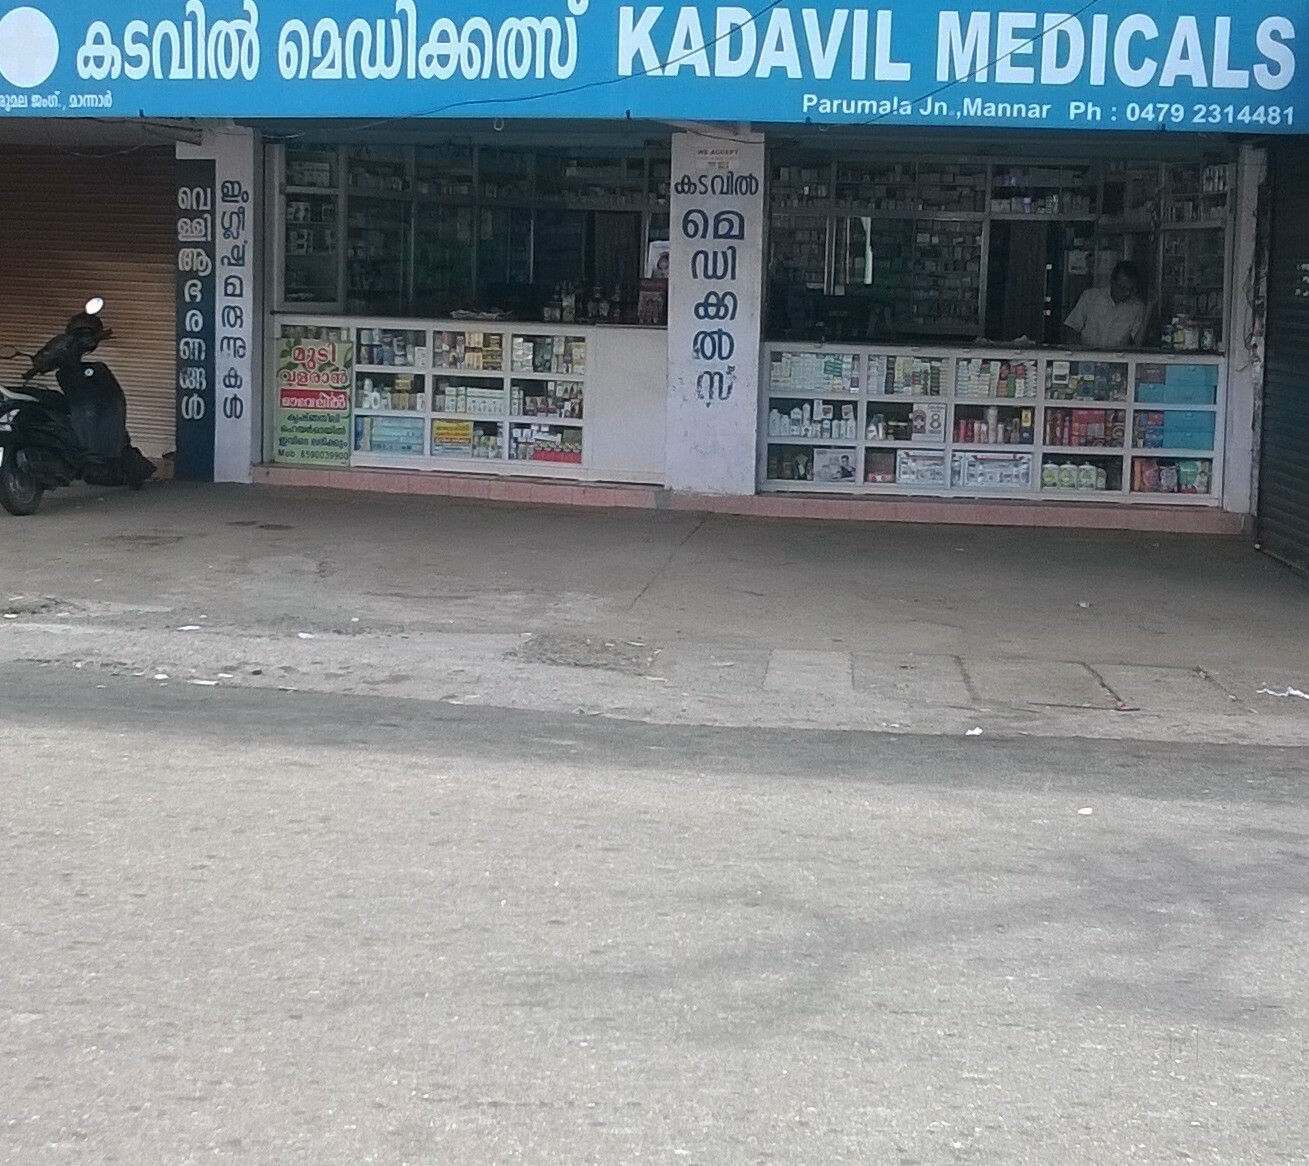 Kadavil Medicals, MEDICAL SHOP,  service in Mannar, Alappuzha